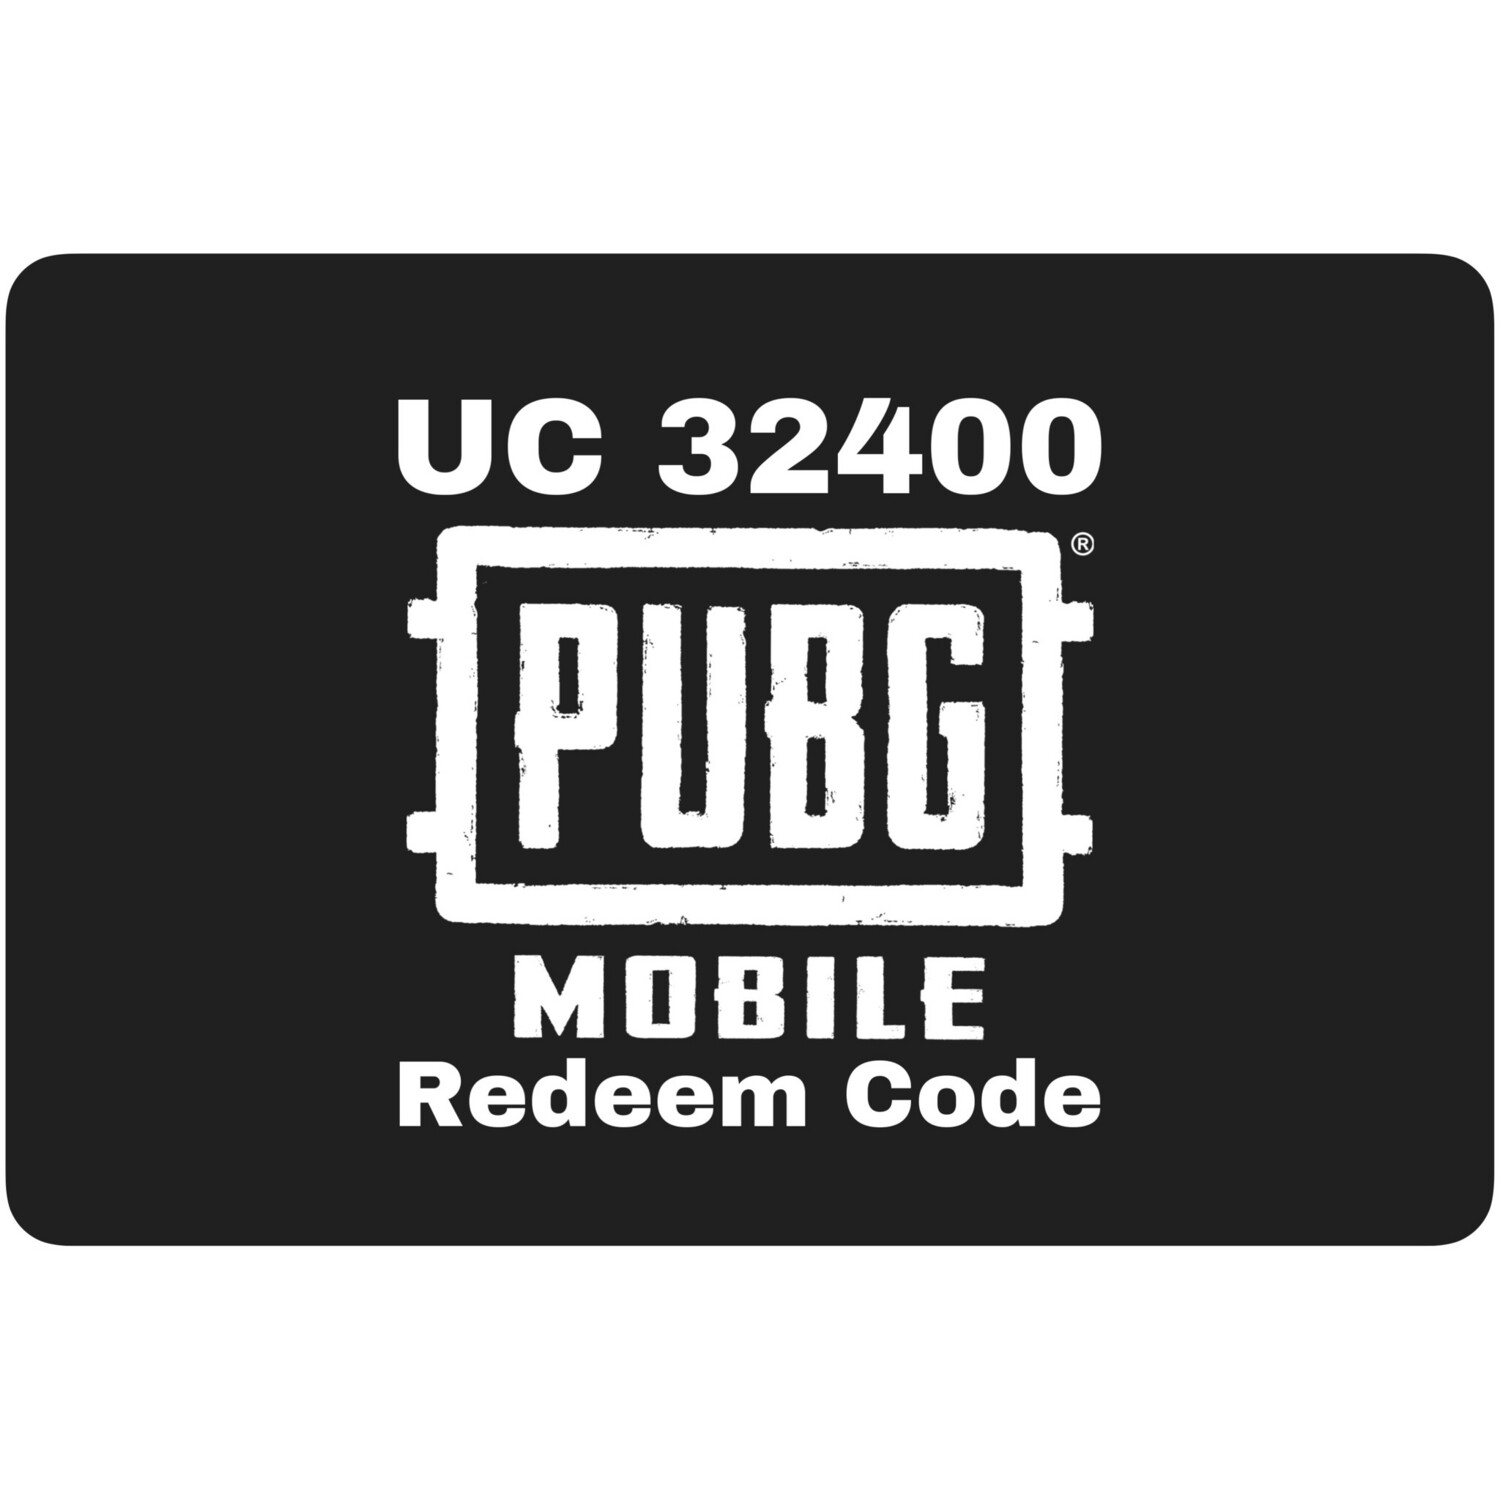 PUBG Mobile UC 32400 Redeem Code Global Voucher